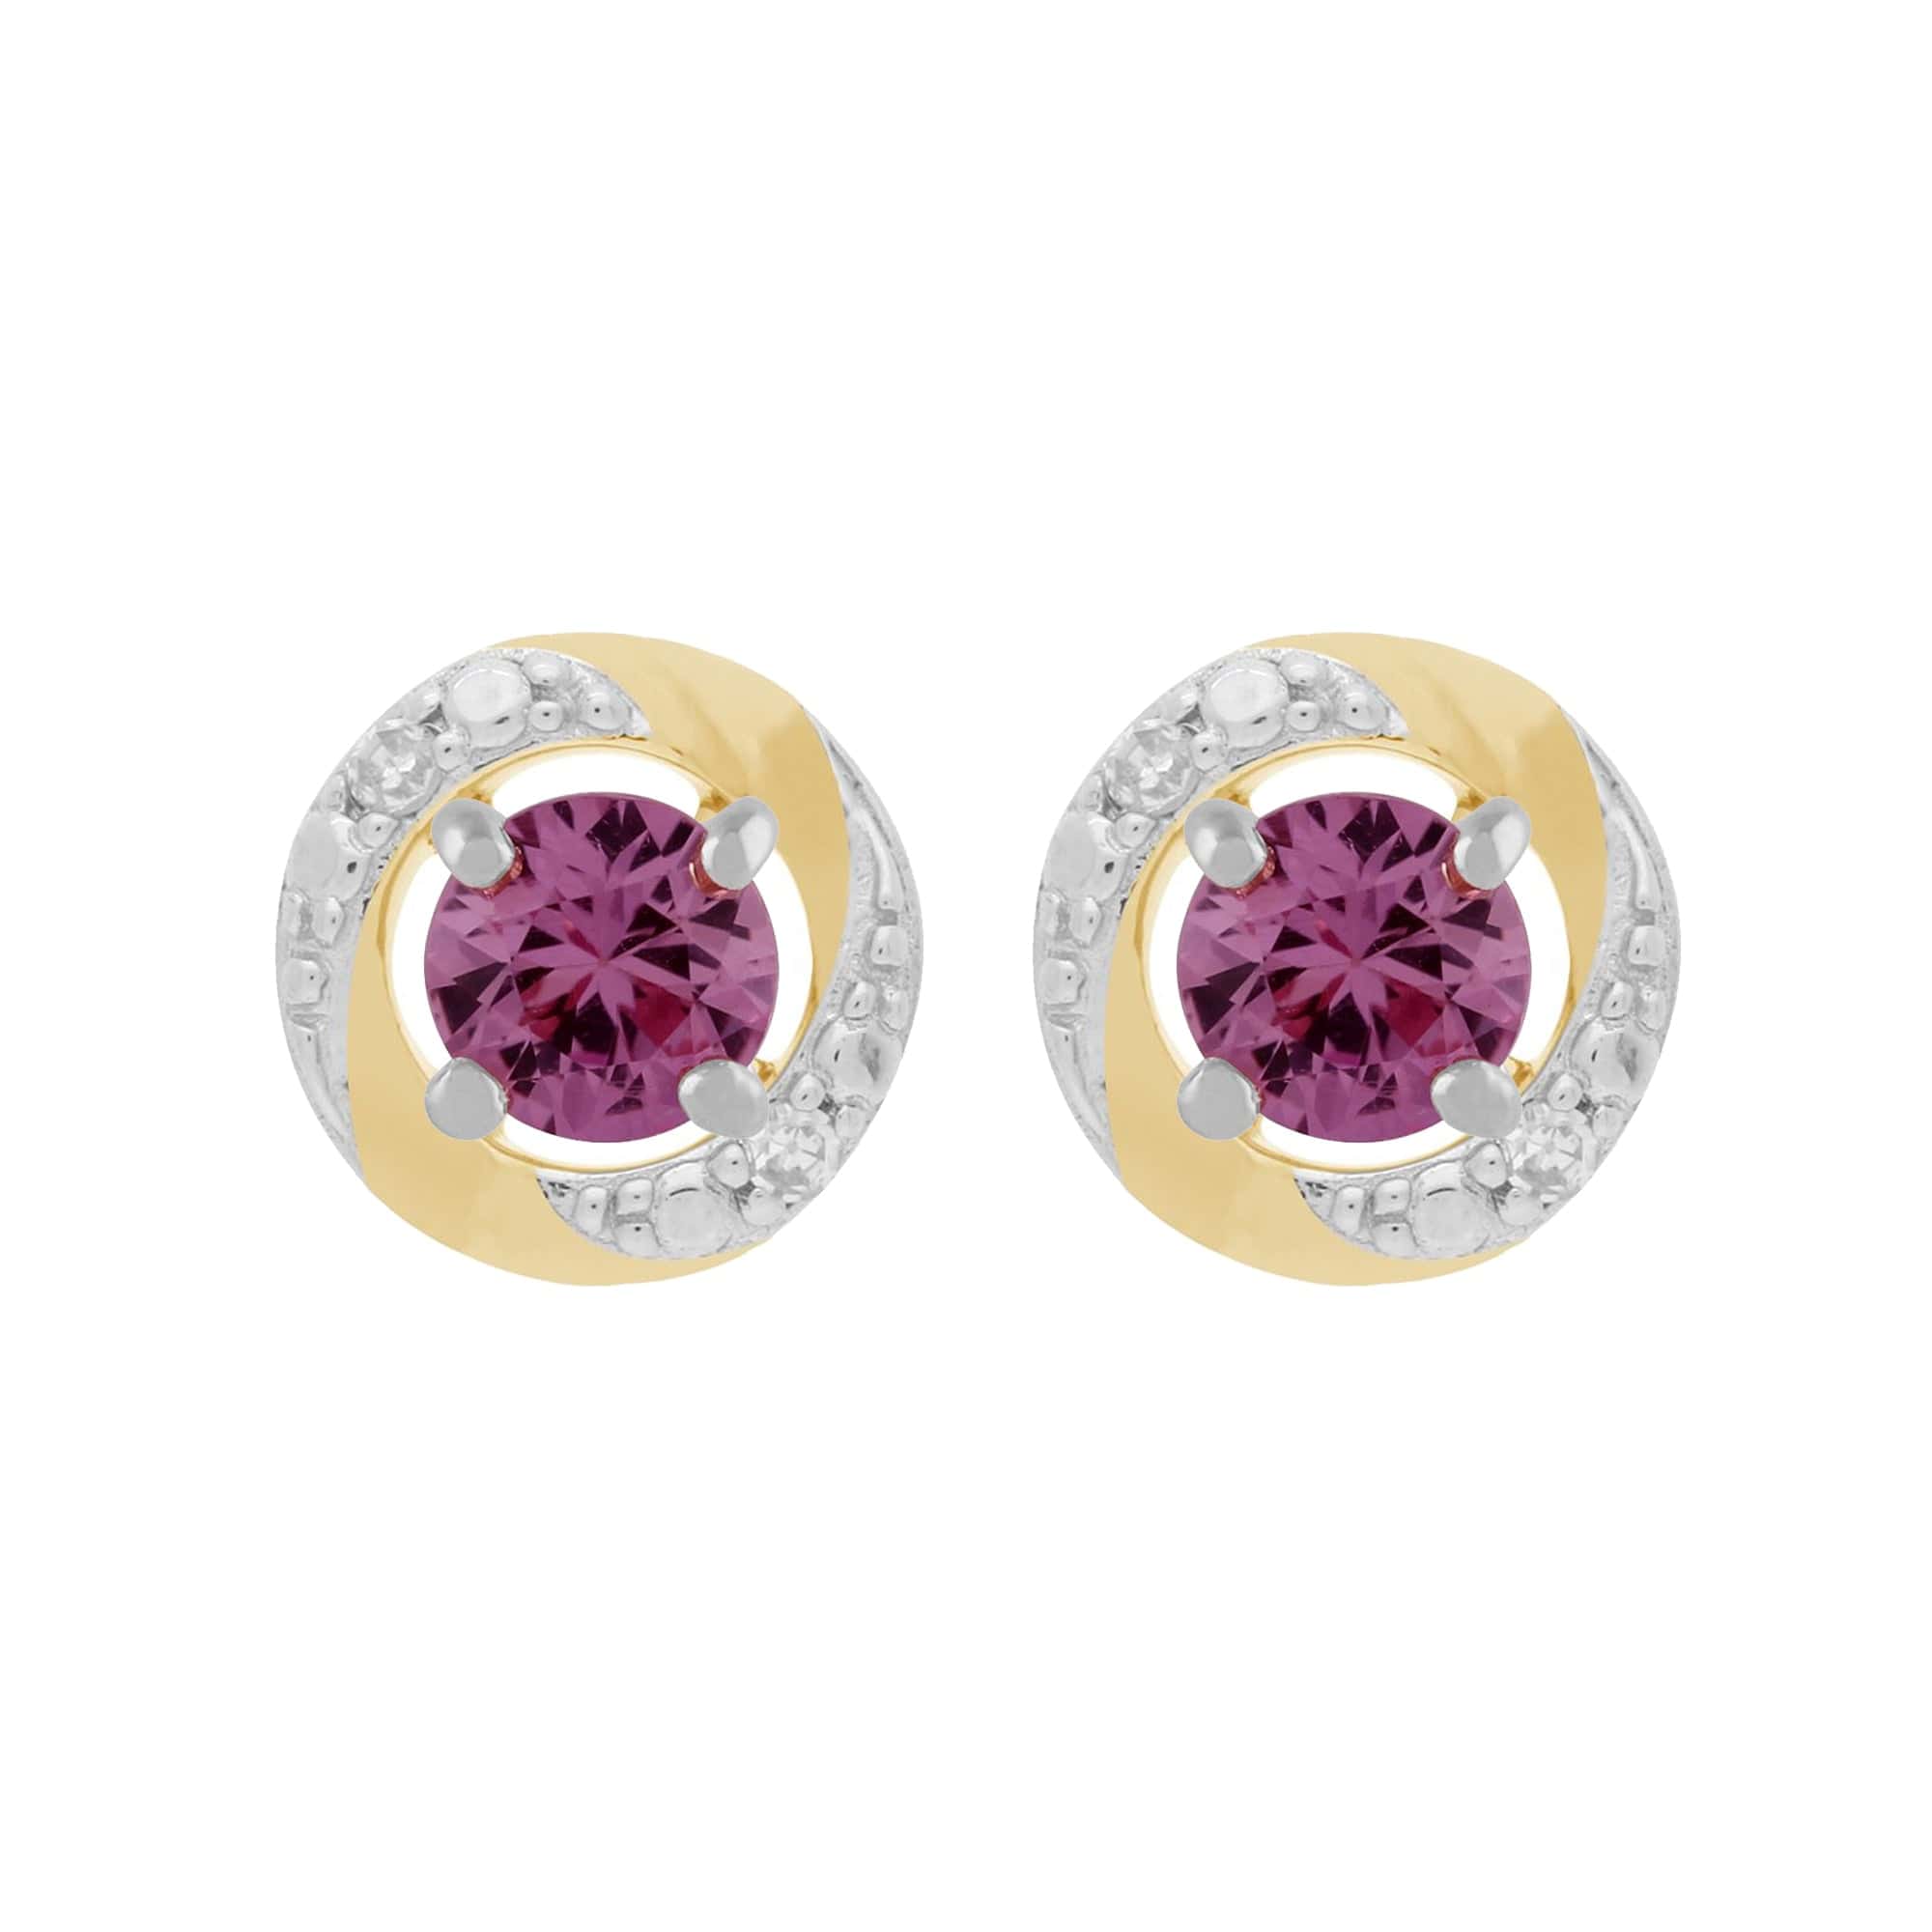 9ct White Gold Pink Sapphire Stud Earrings & Diamond Halo Ear Jacket Image 1 